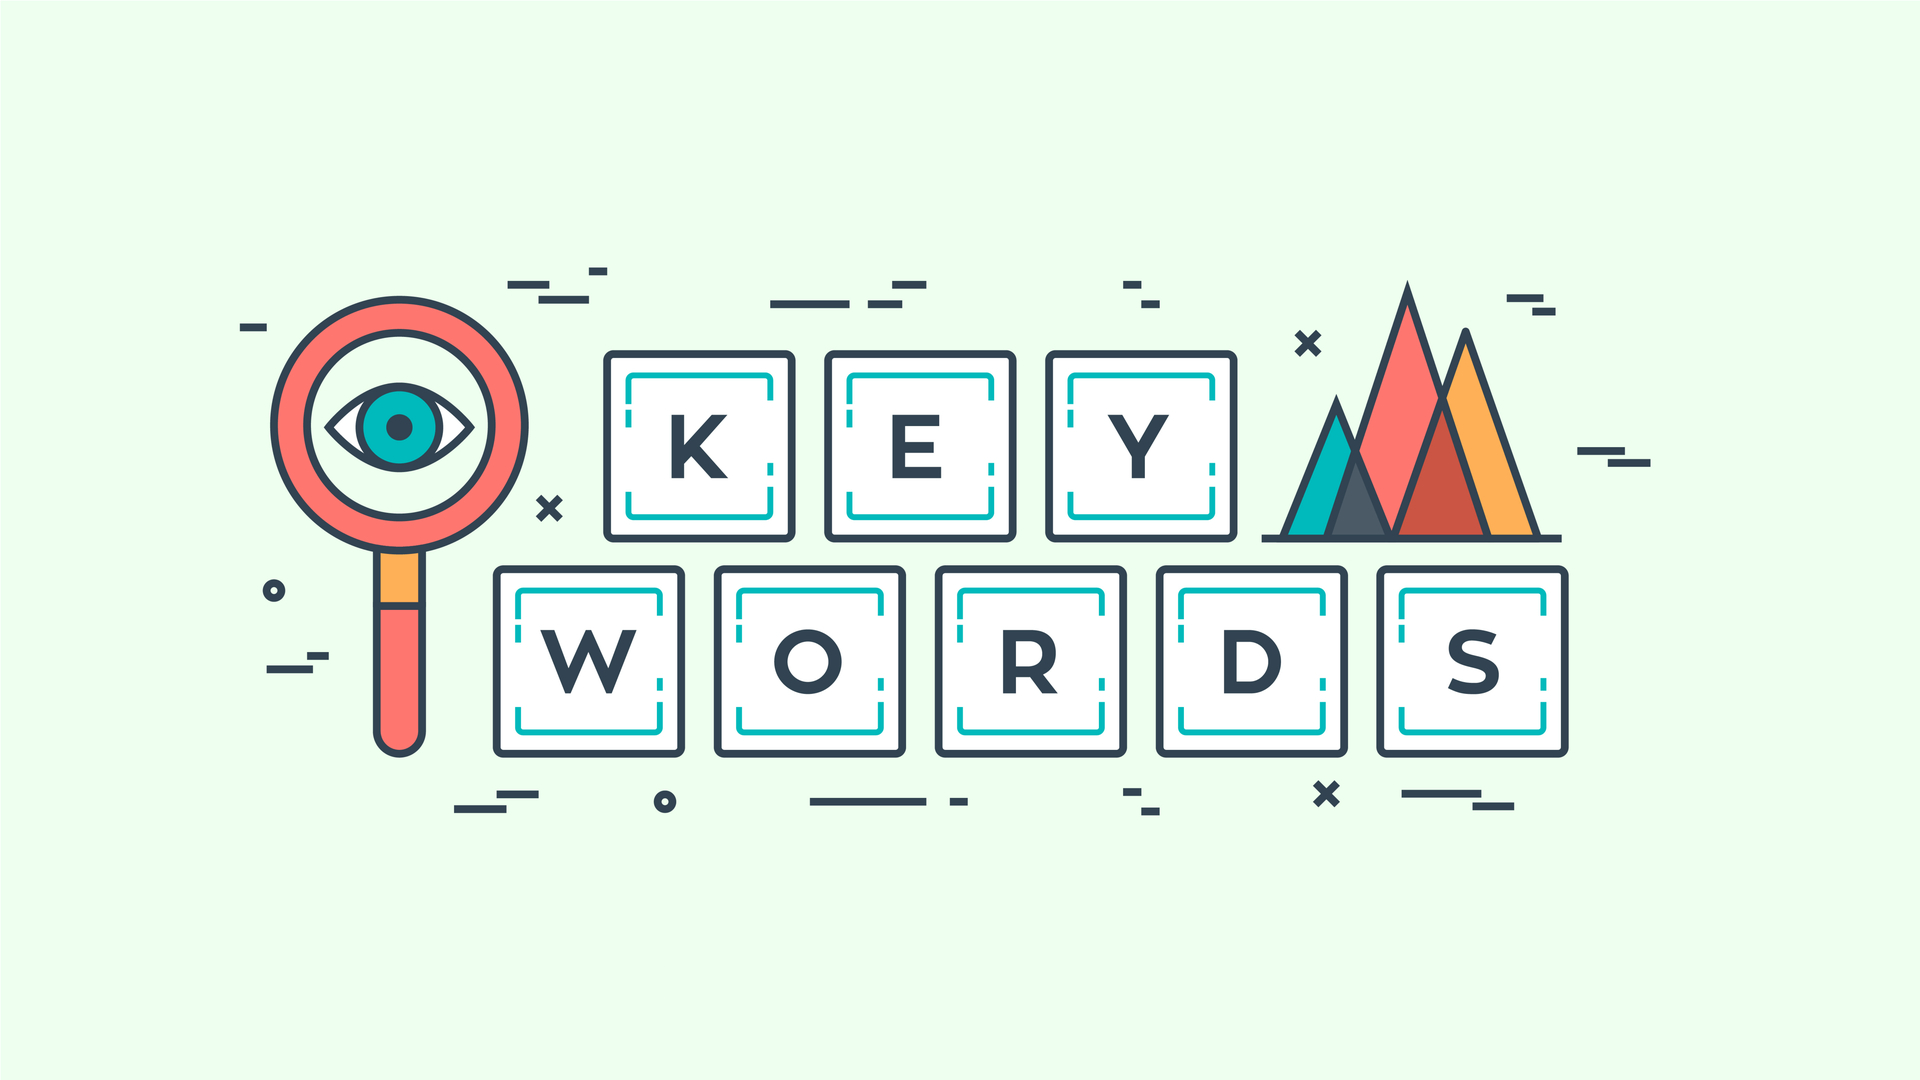 Scomporre keywords composte e trovare nuove parole chiave